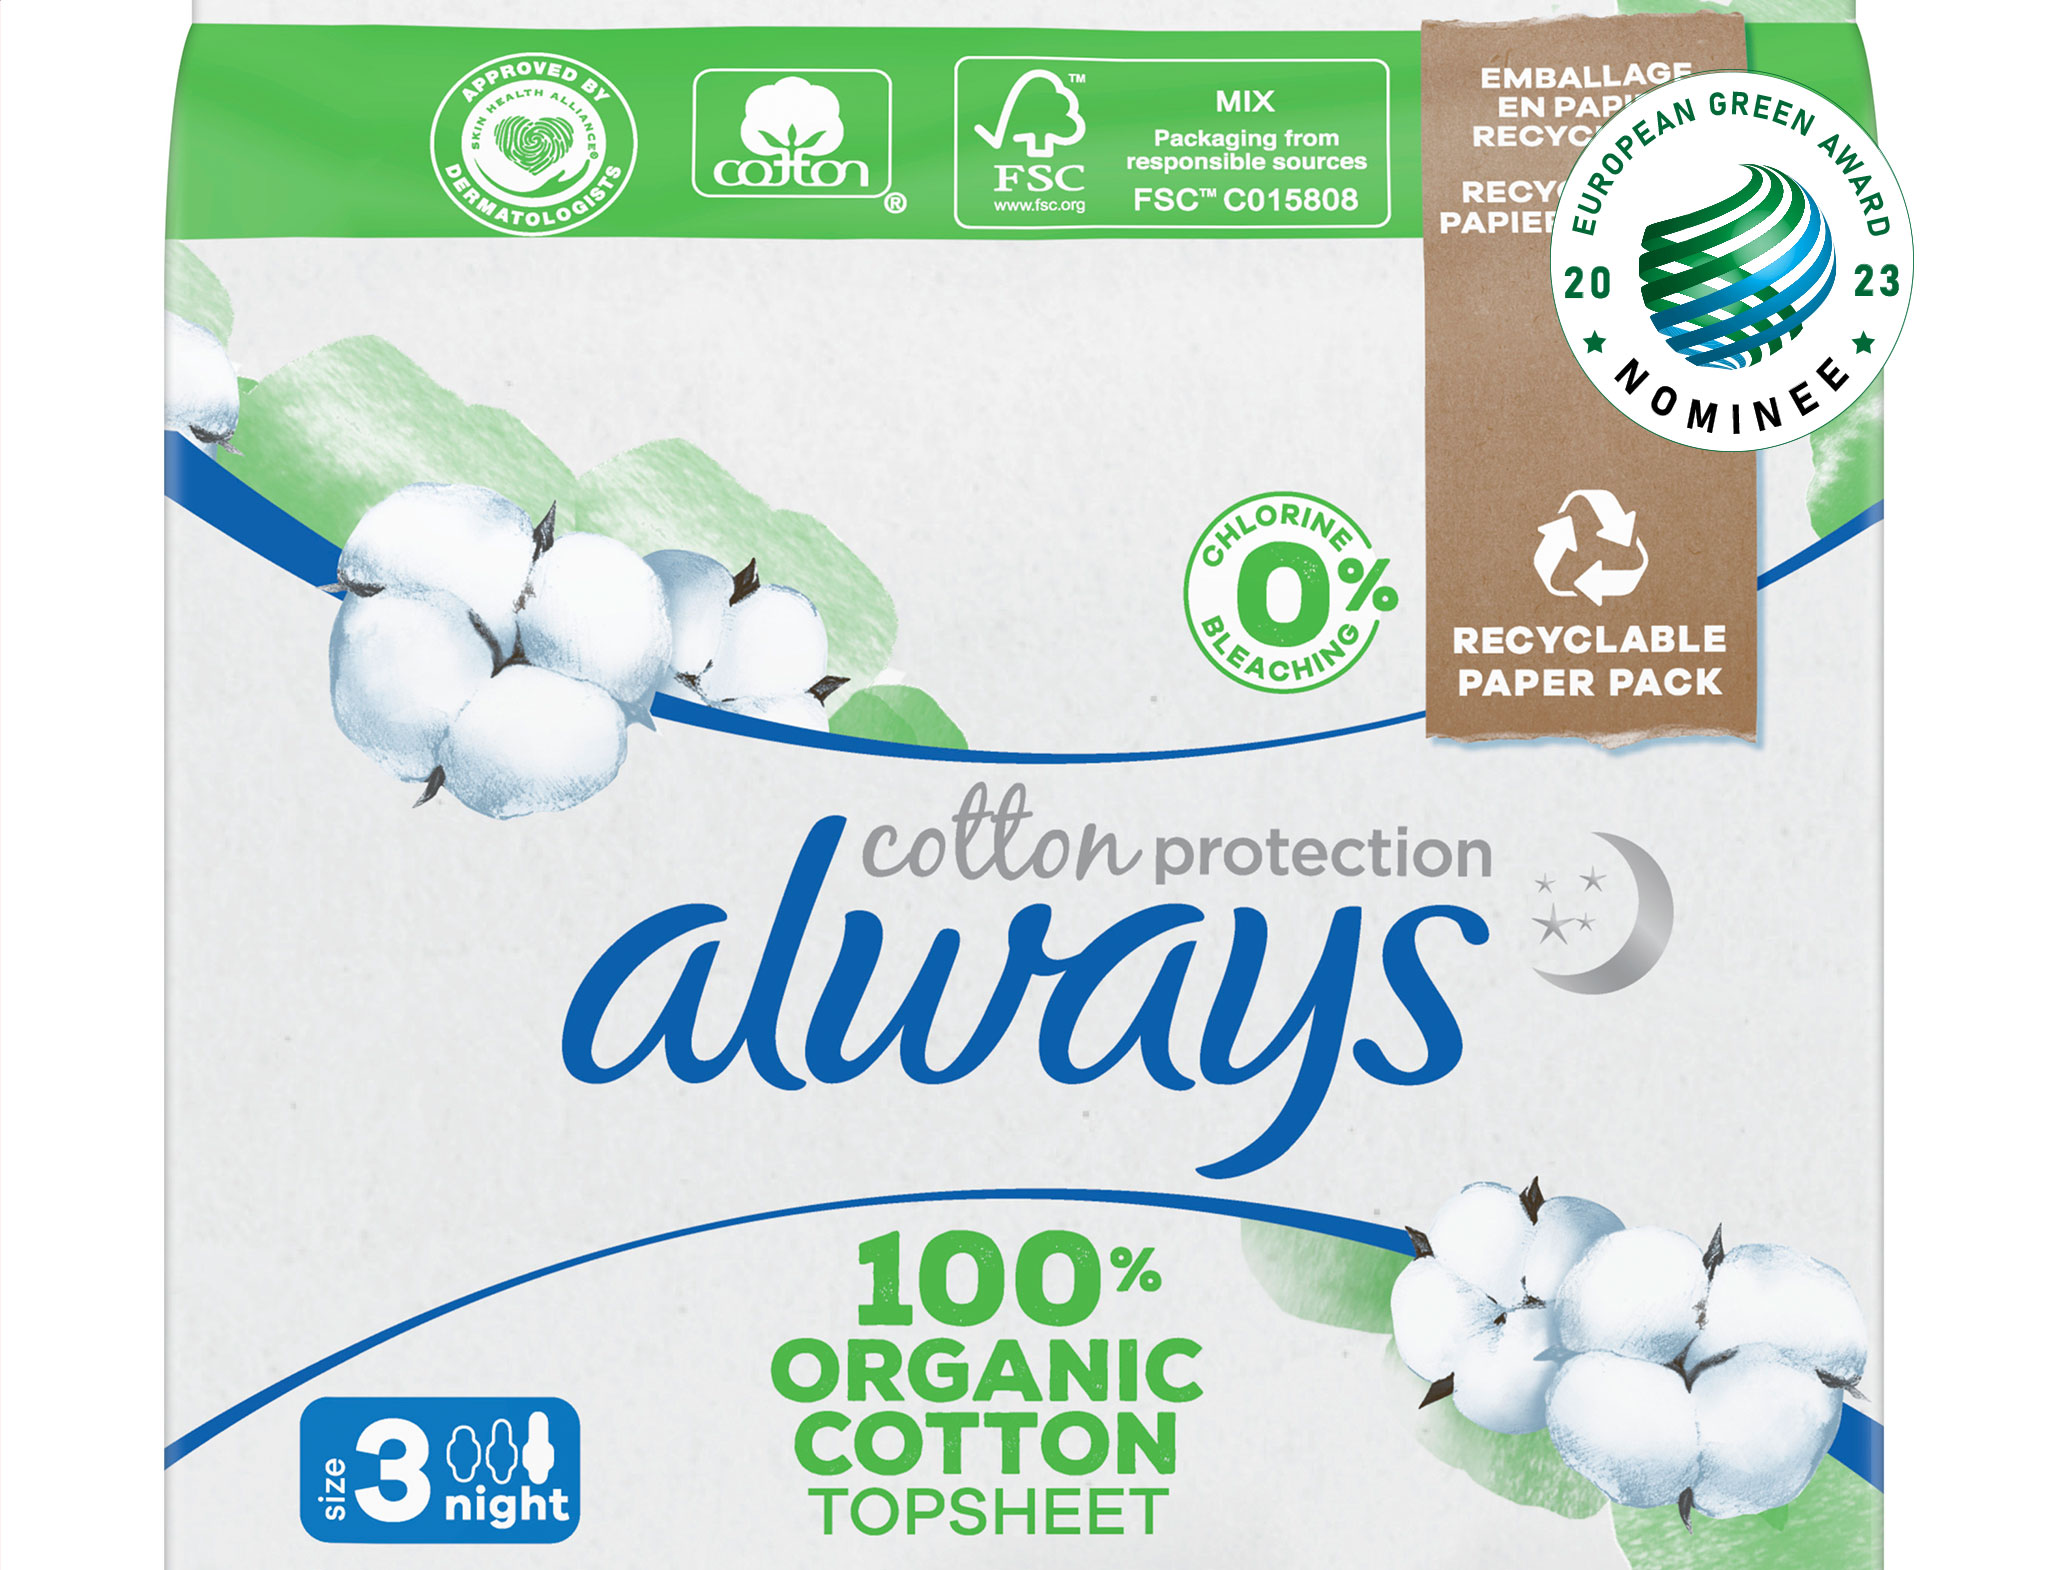 Always Cotton Protection ‚Magic Paper' Packaging (EN) – European Green Award